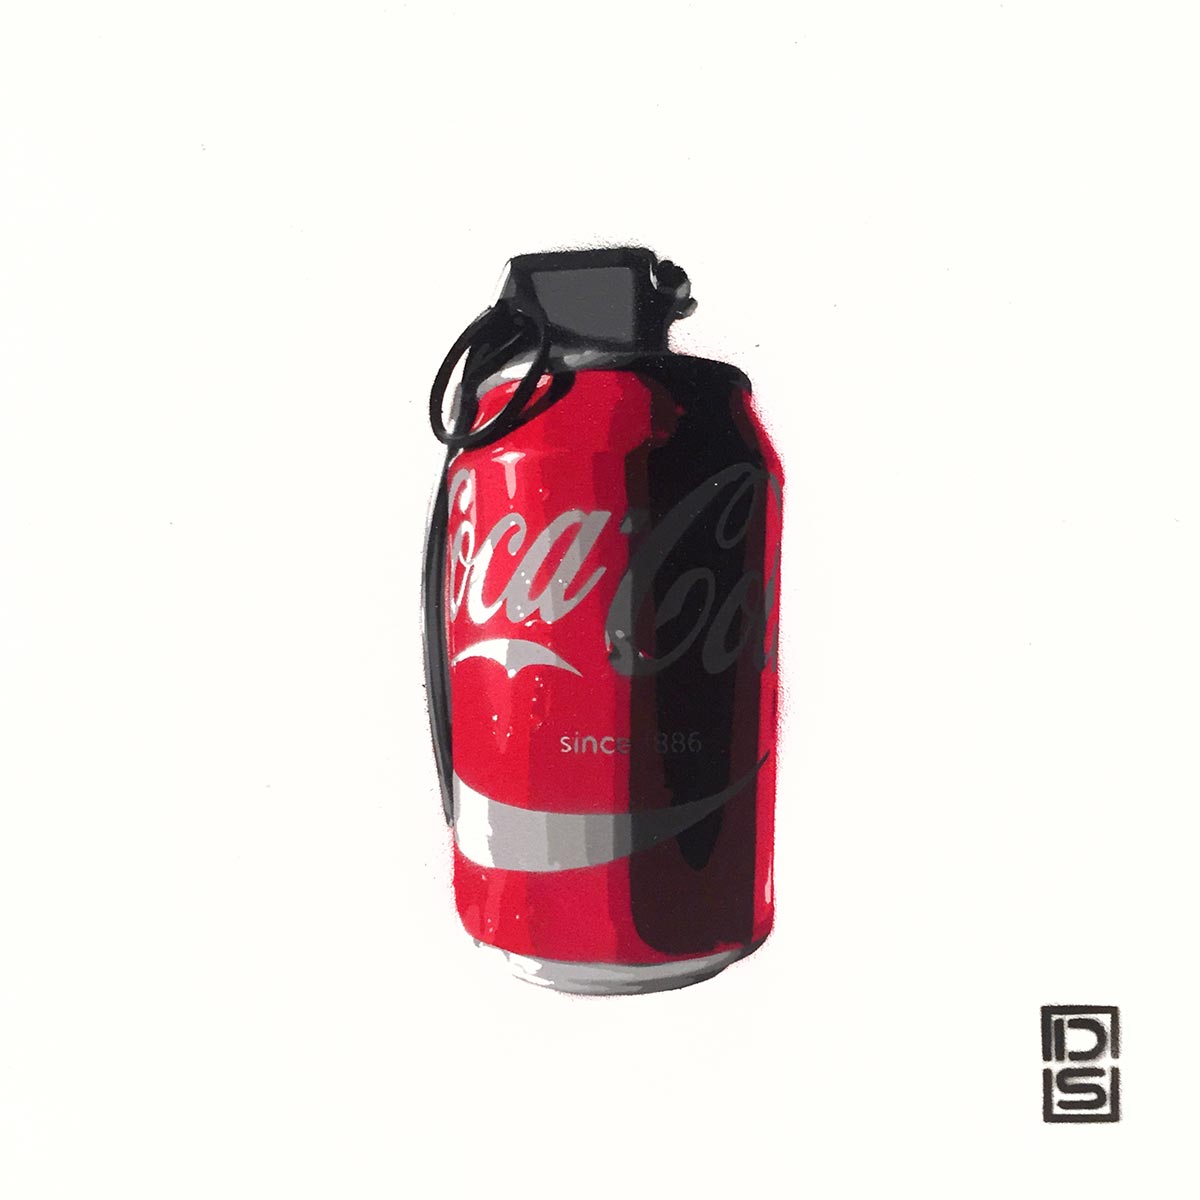 Coke problem stencil art